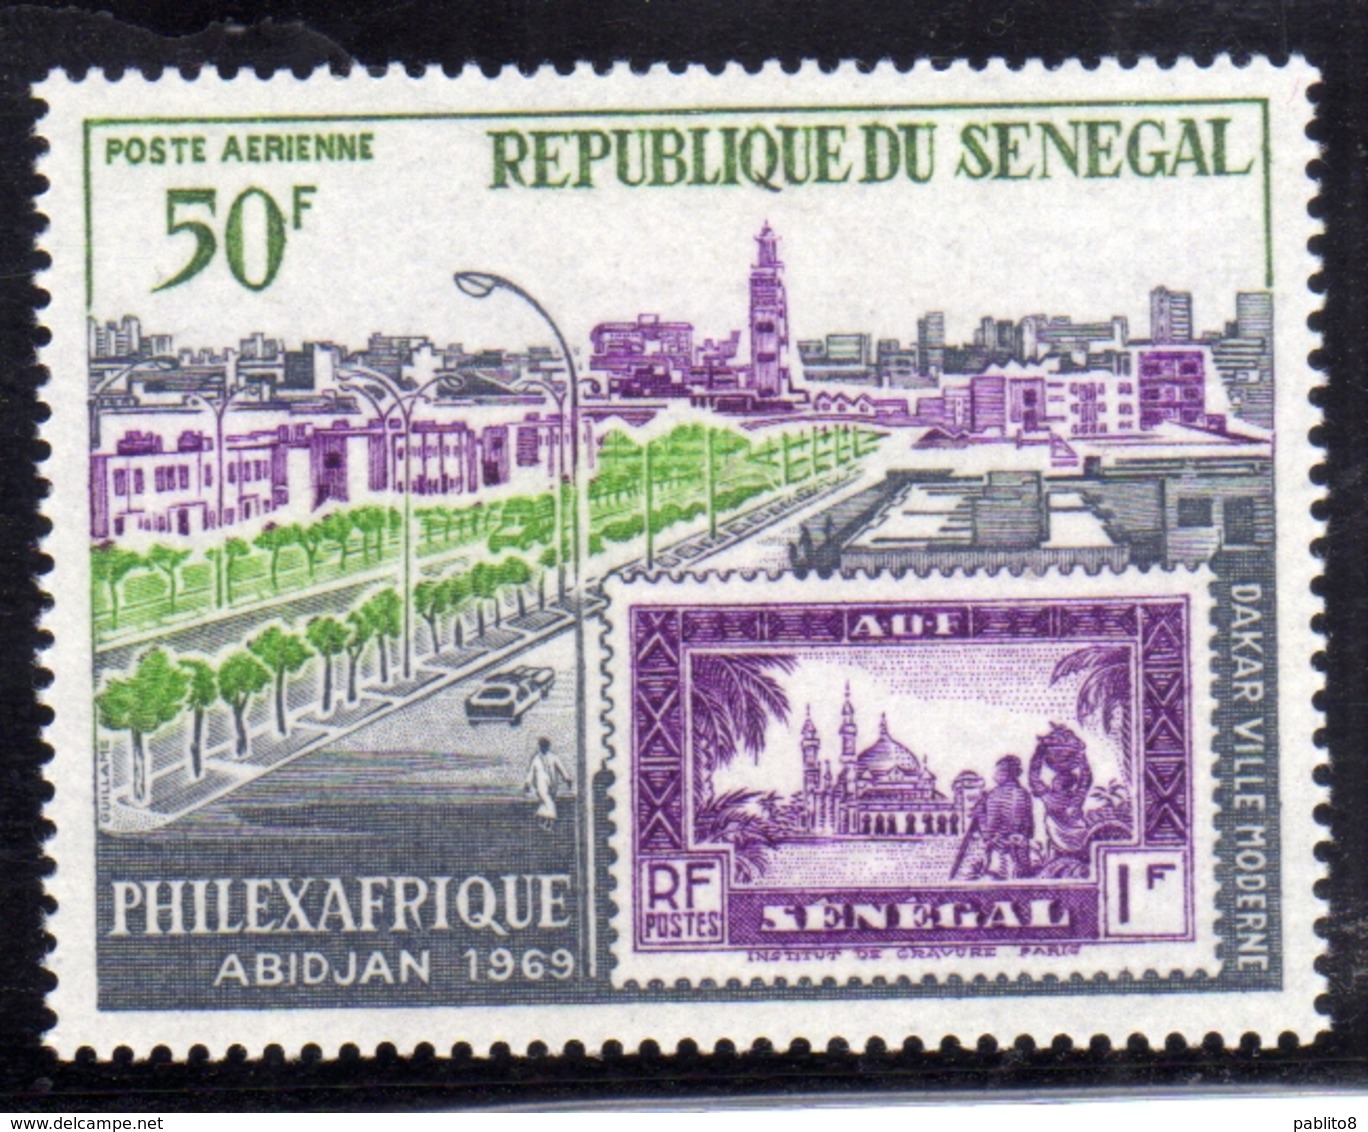 SENEGAL 1969 PHILEXAFRIQUE ISSUE BOULEVARD DAKAR 50f MNH - Senegal (1960-...)